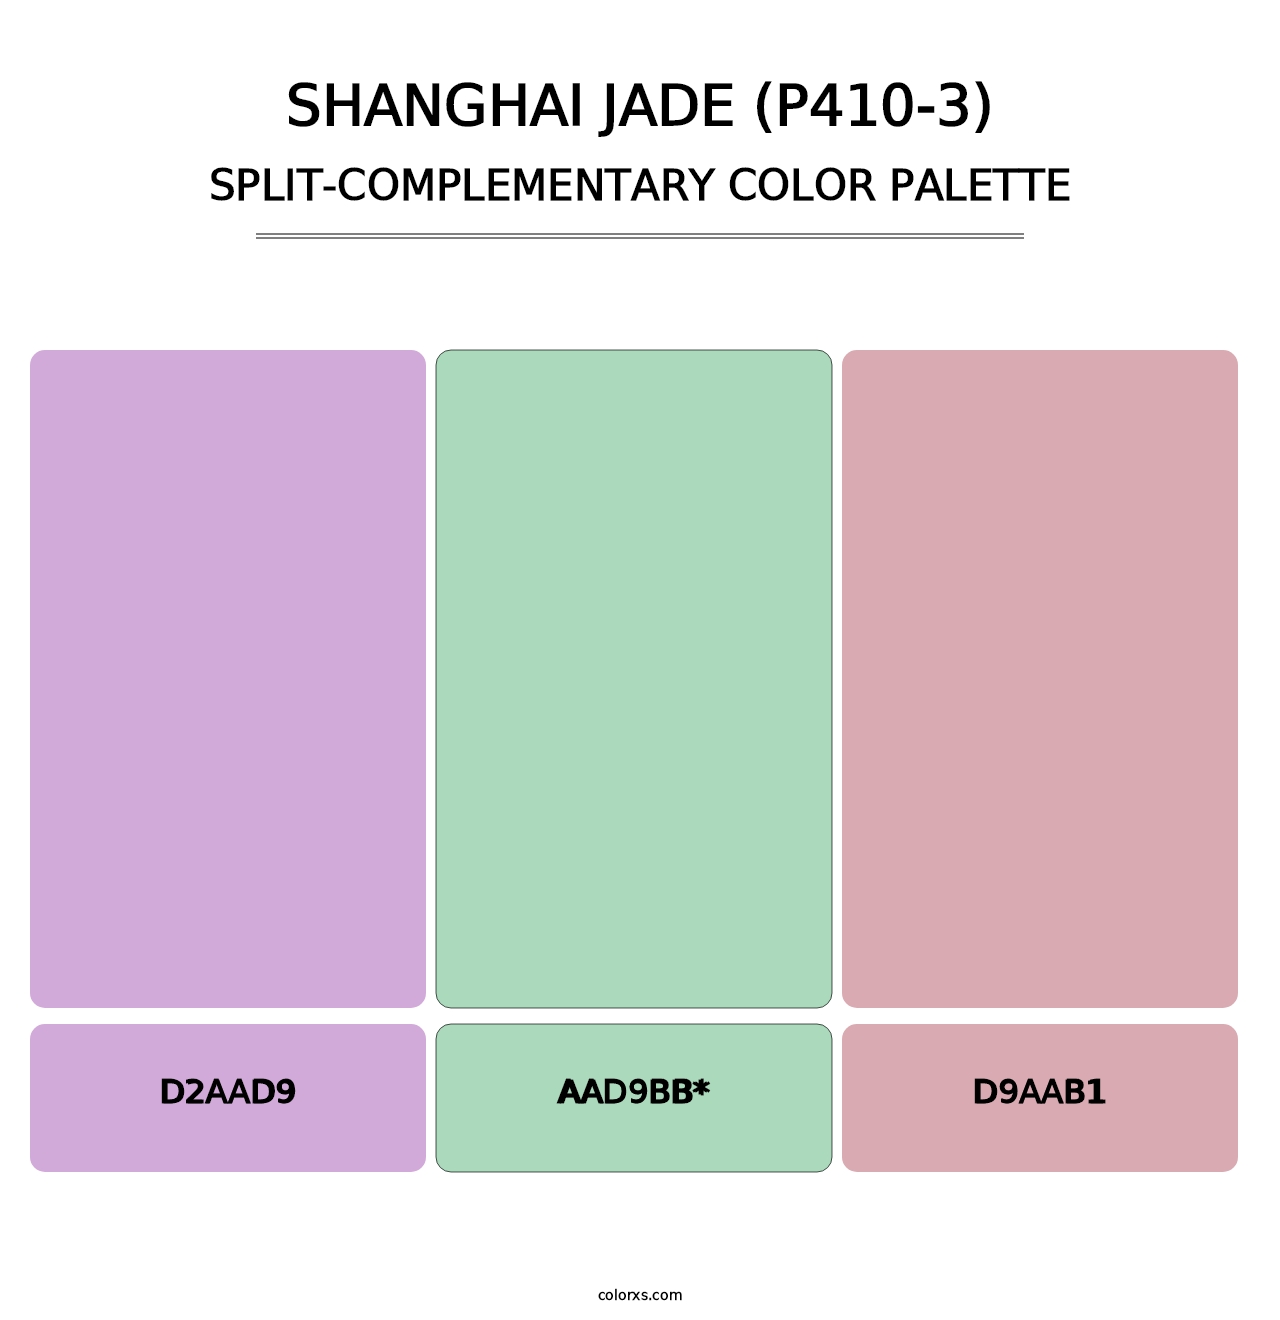 Shanghai Jade (P410-3) - Split-Complementary Color Palette